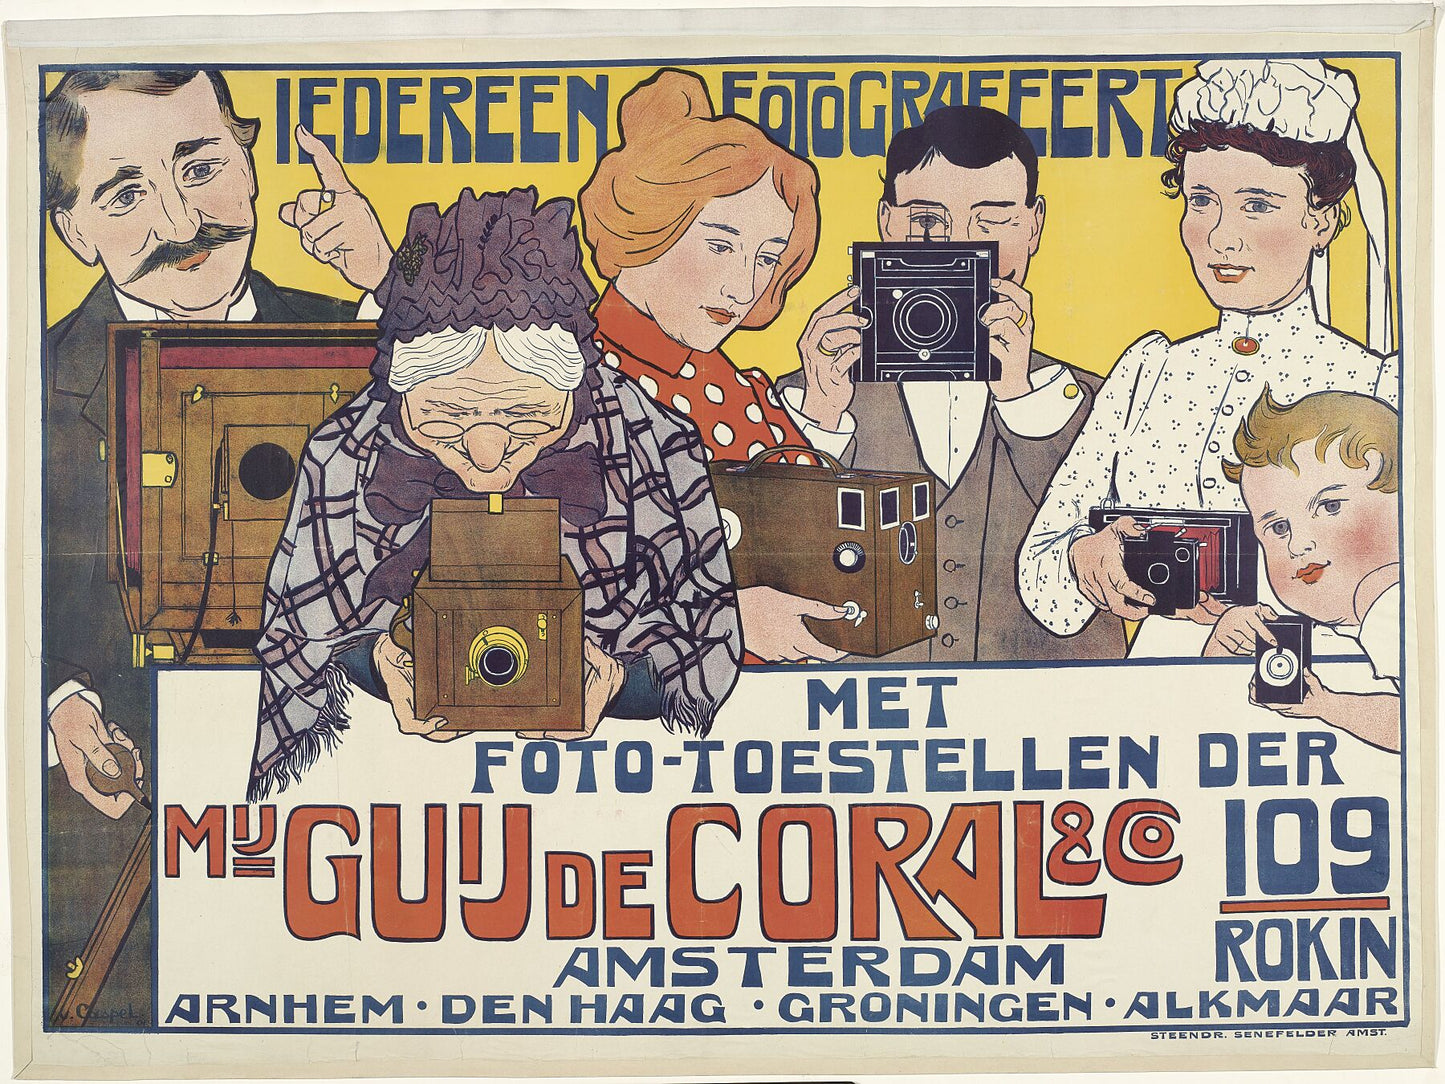 Everyone a Photographer Poster for Guy de Coral & Co, Johann Georg van Caspel, 1901